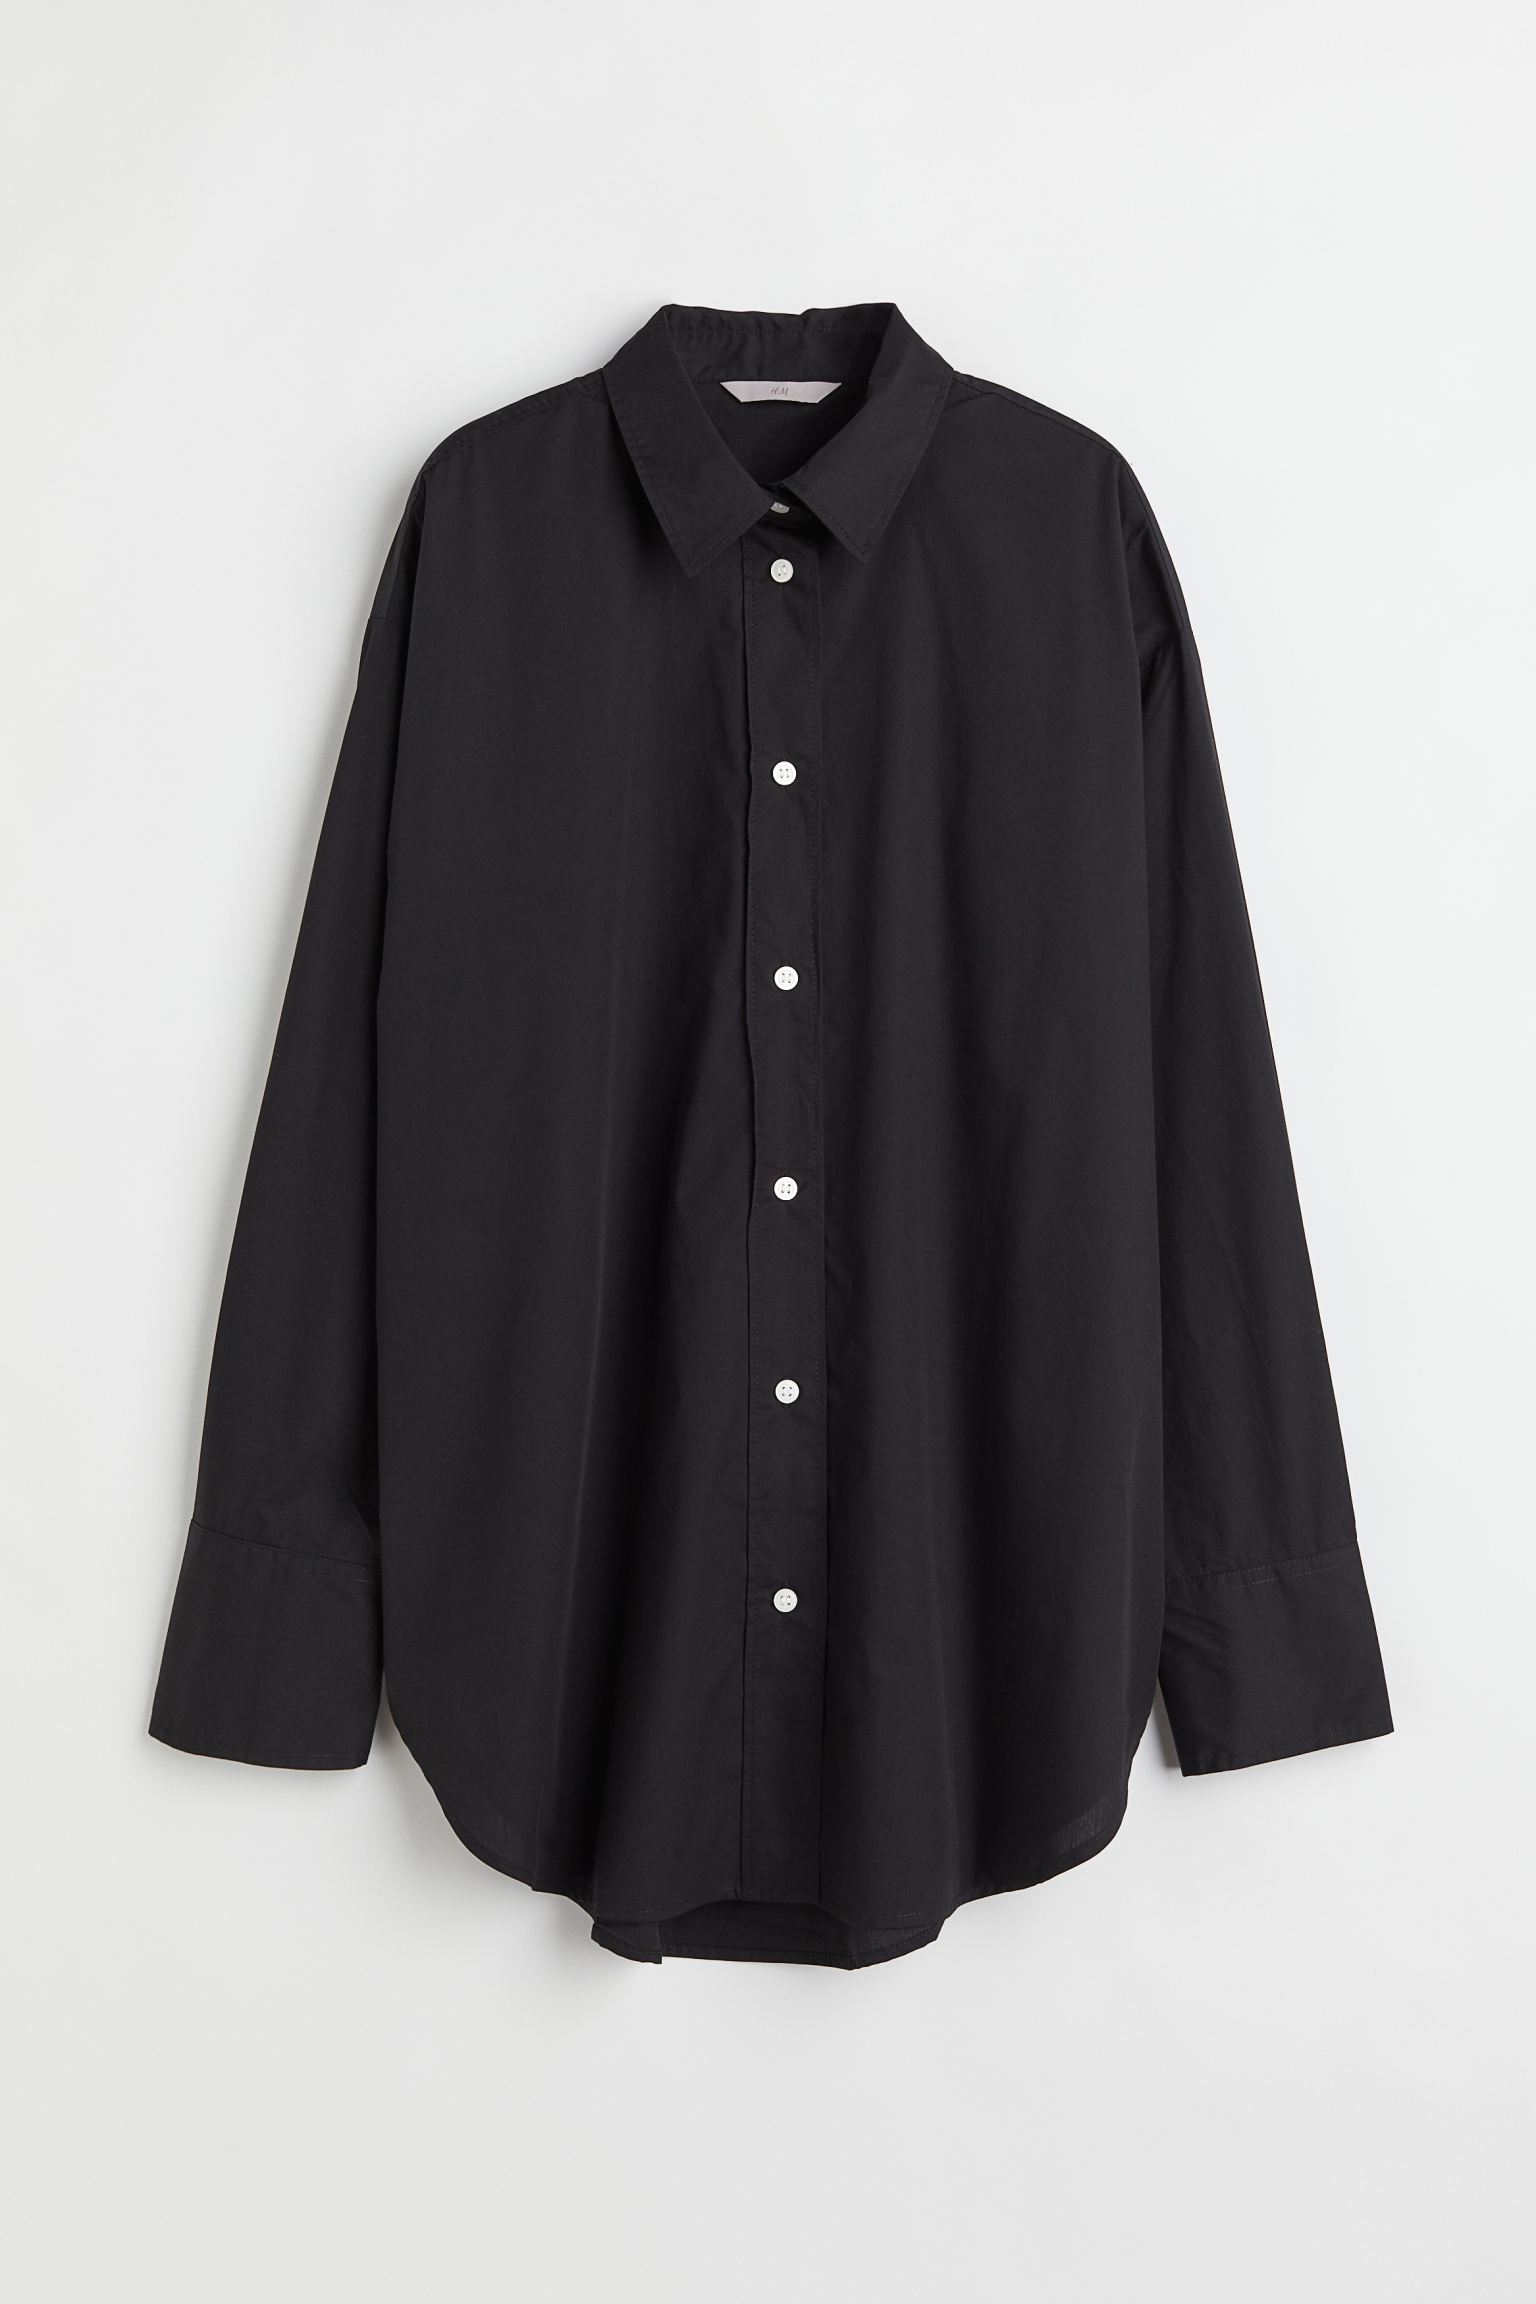 Рубашка женская H&M 1021344008 черная XS (доставка из-за рубежа)